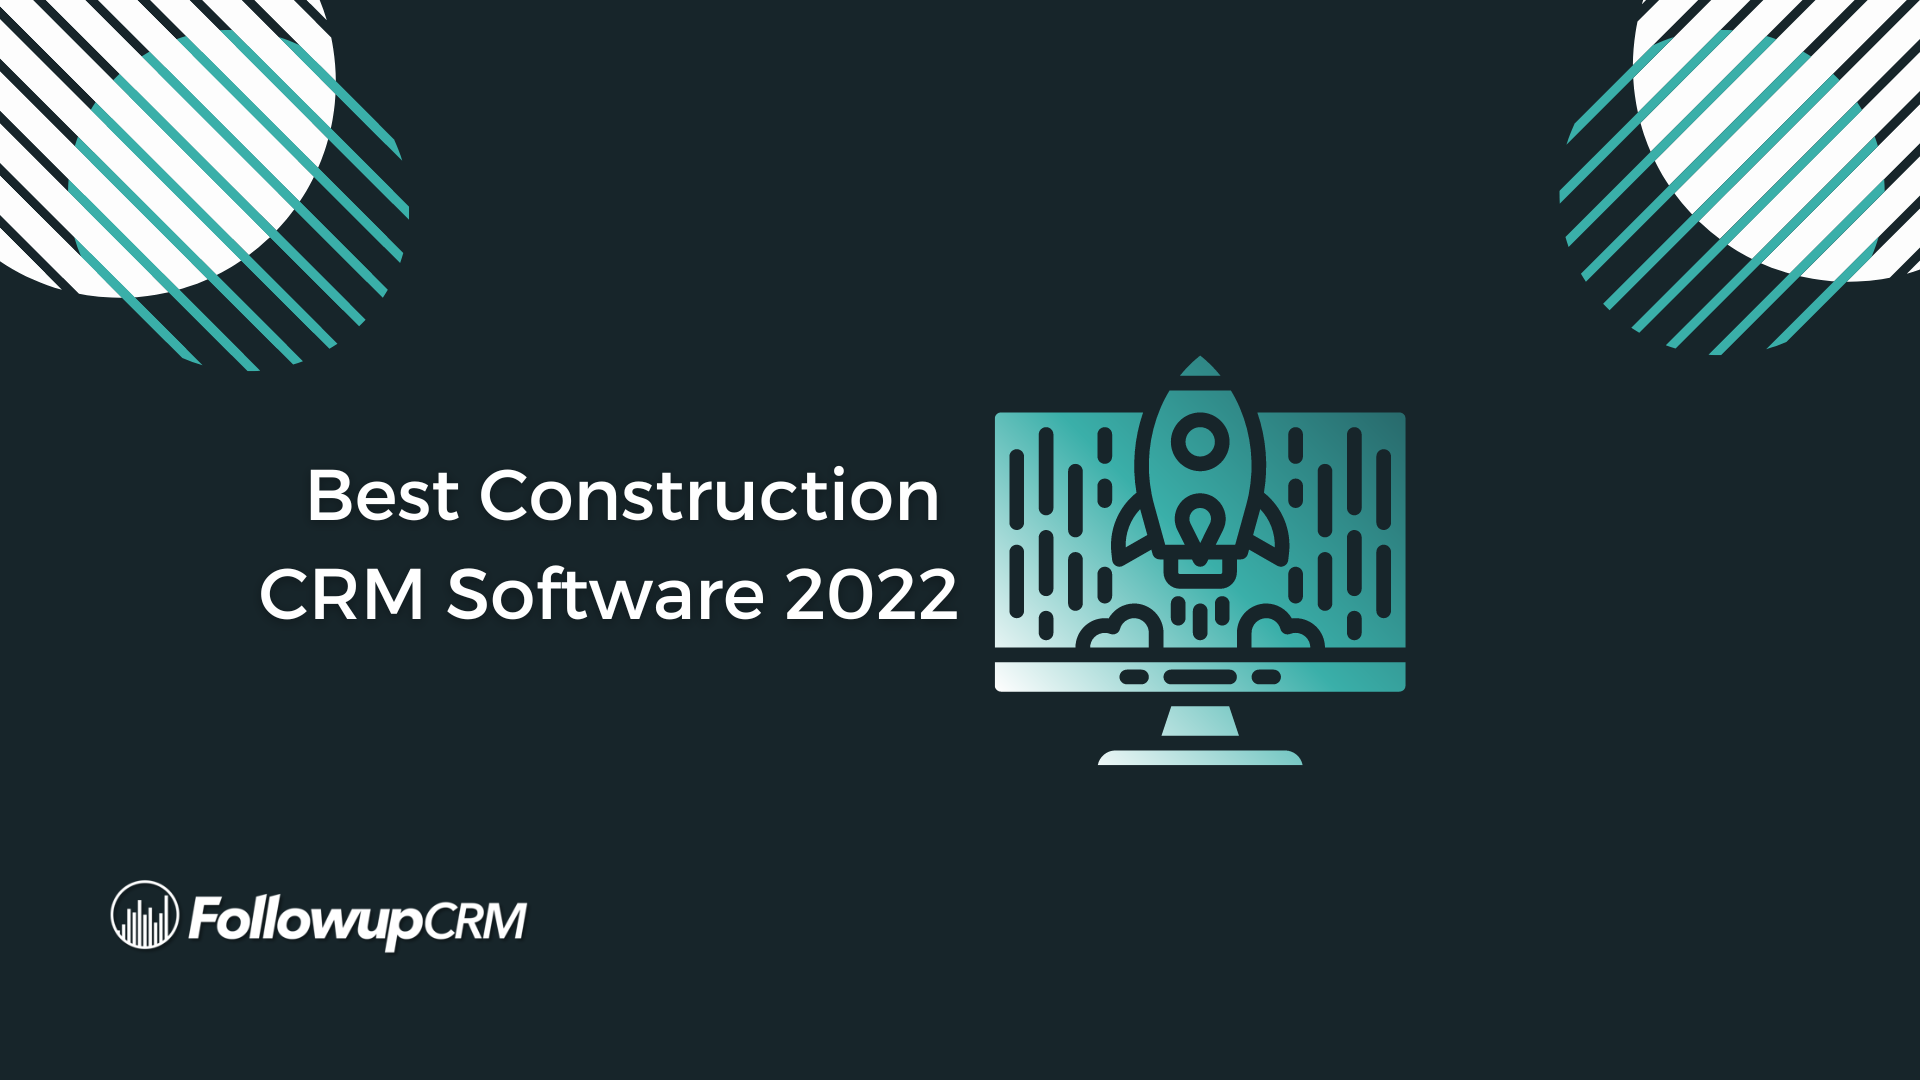 Best Construction CRM Software 2022